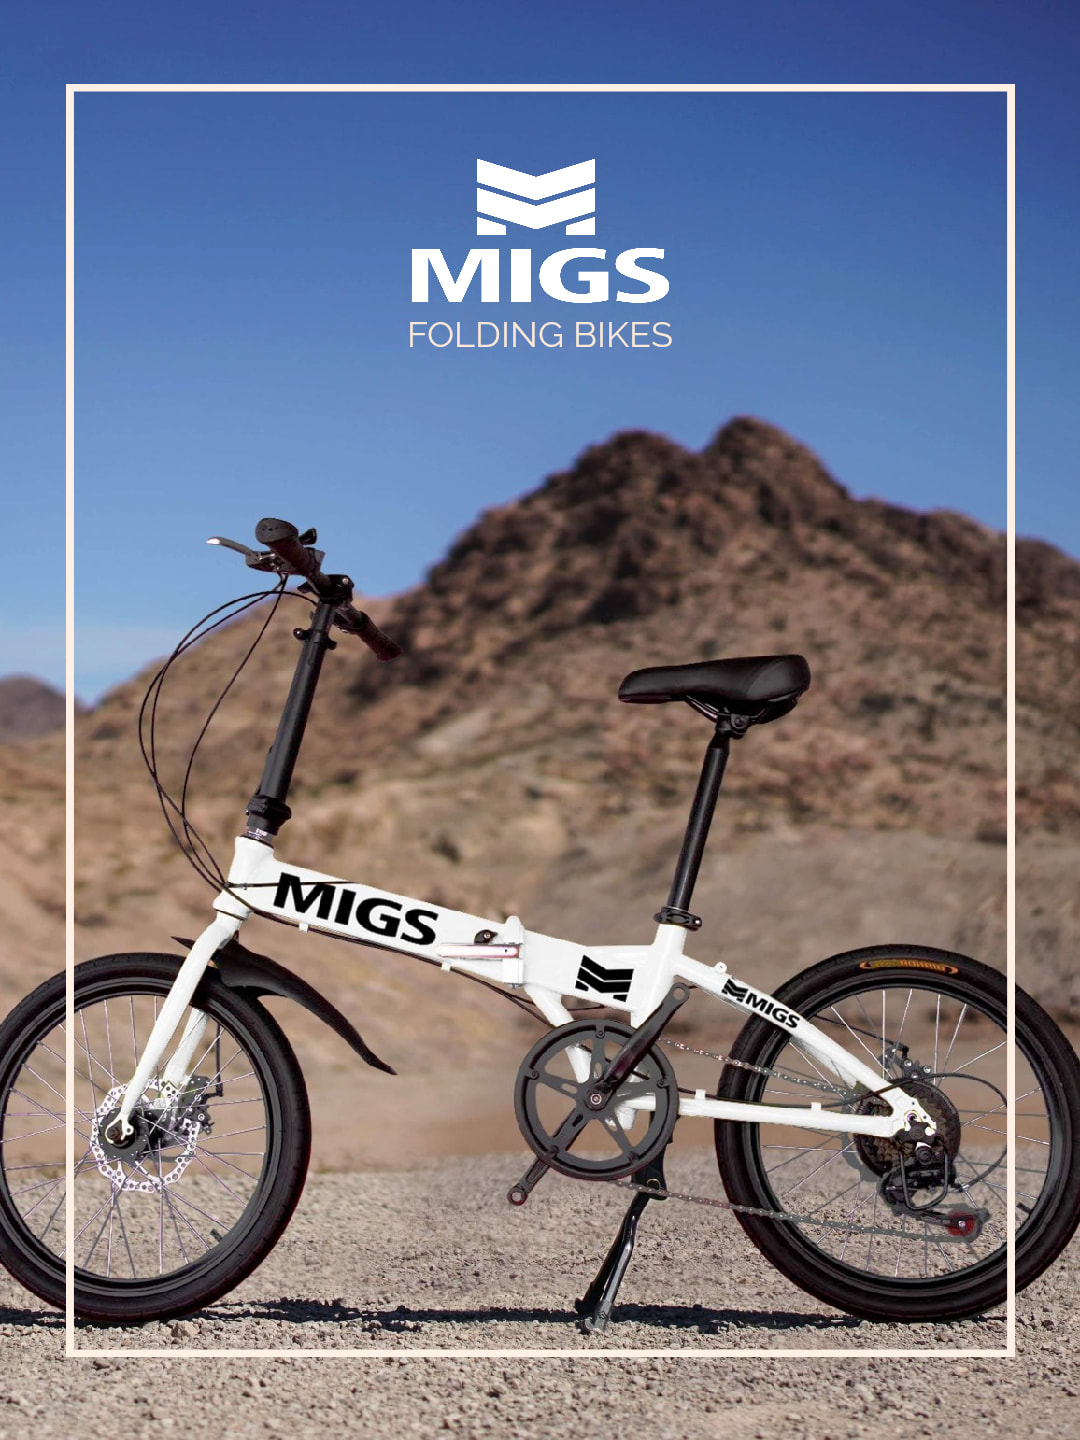 Migs folding bikes